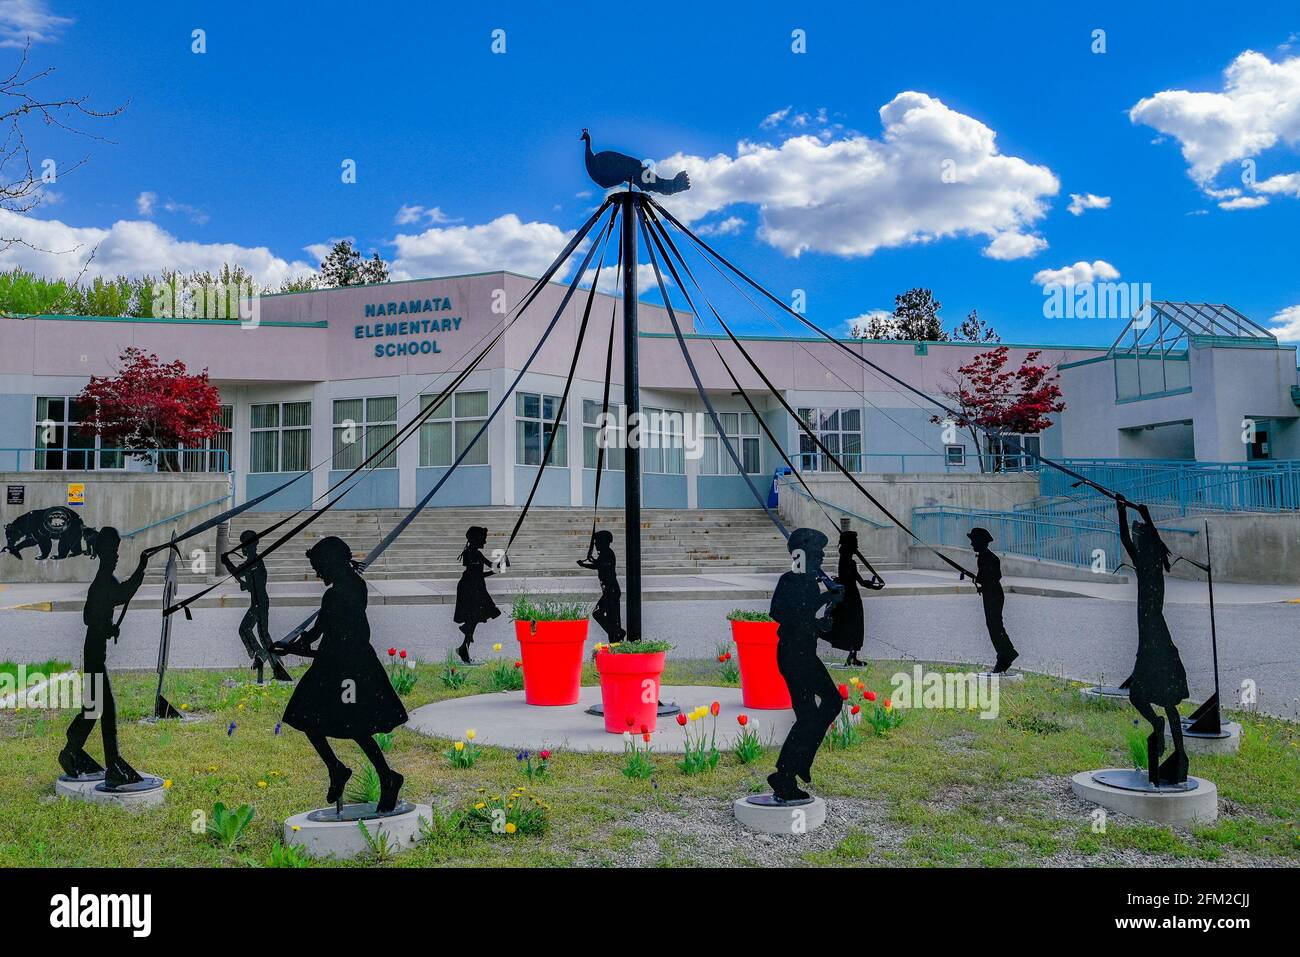 The Maypole Dance, sculpture de Deb Linton., Naramata Elementary School, Naramata, Okanagan Valley, Colombie-Britannique, Canada Banque D'Images